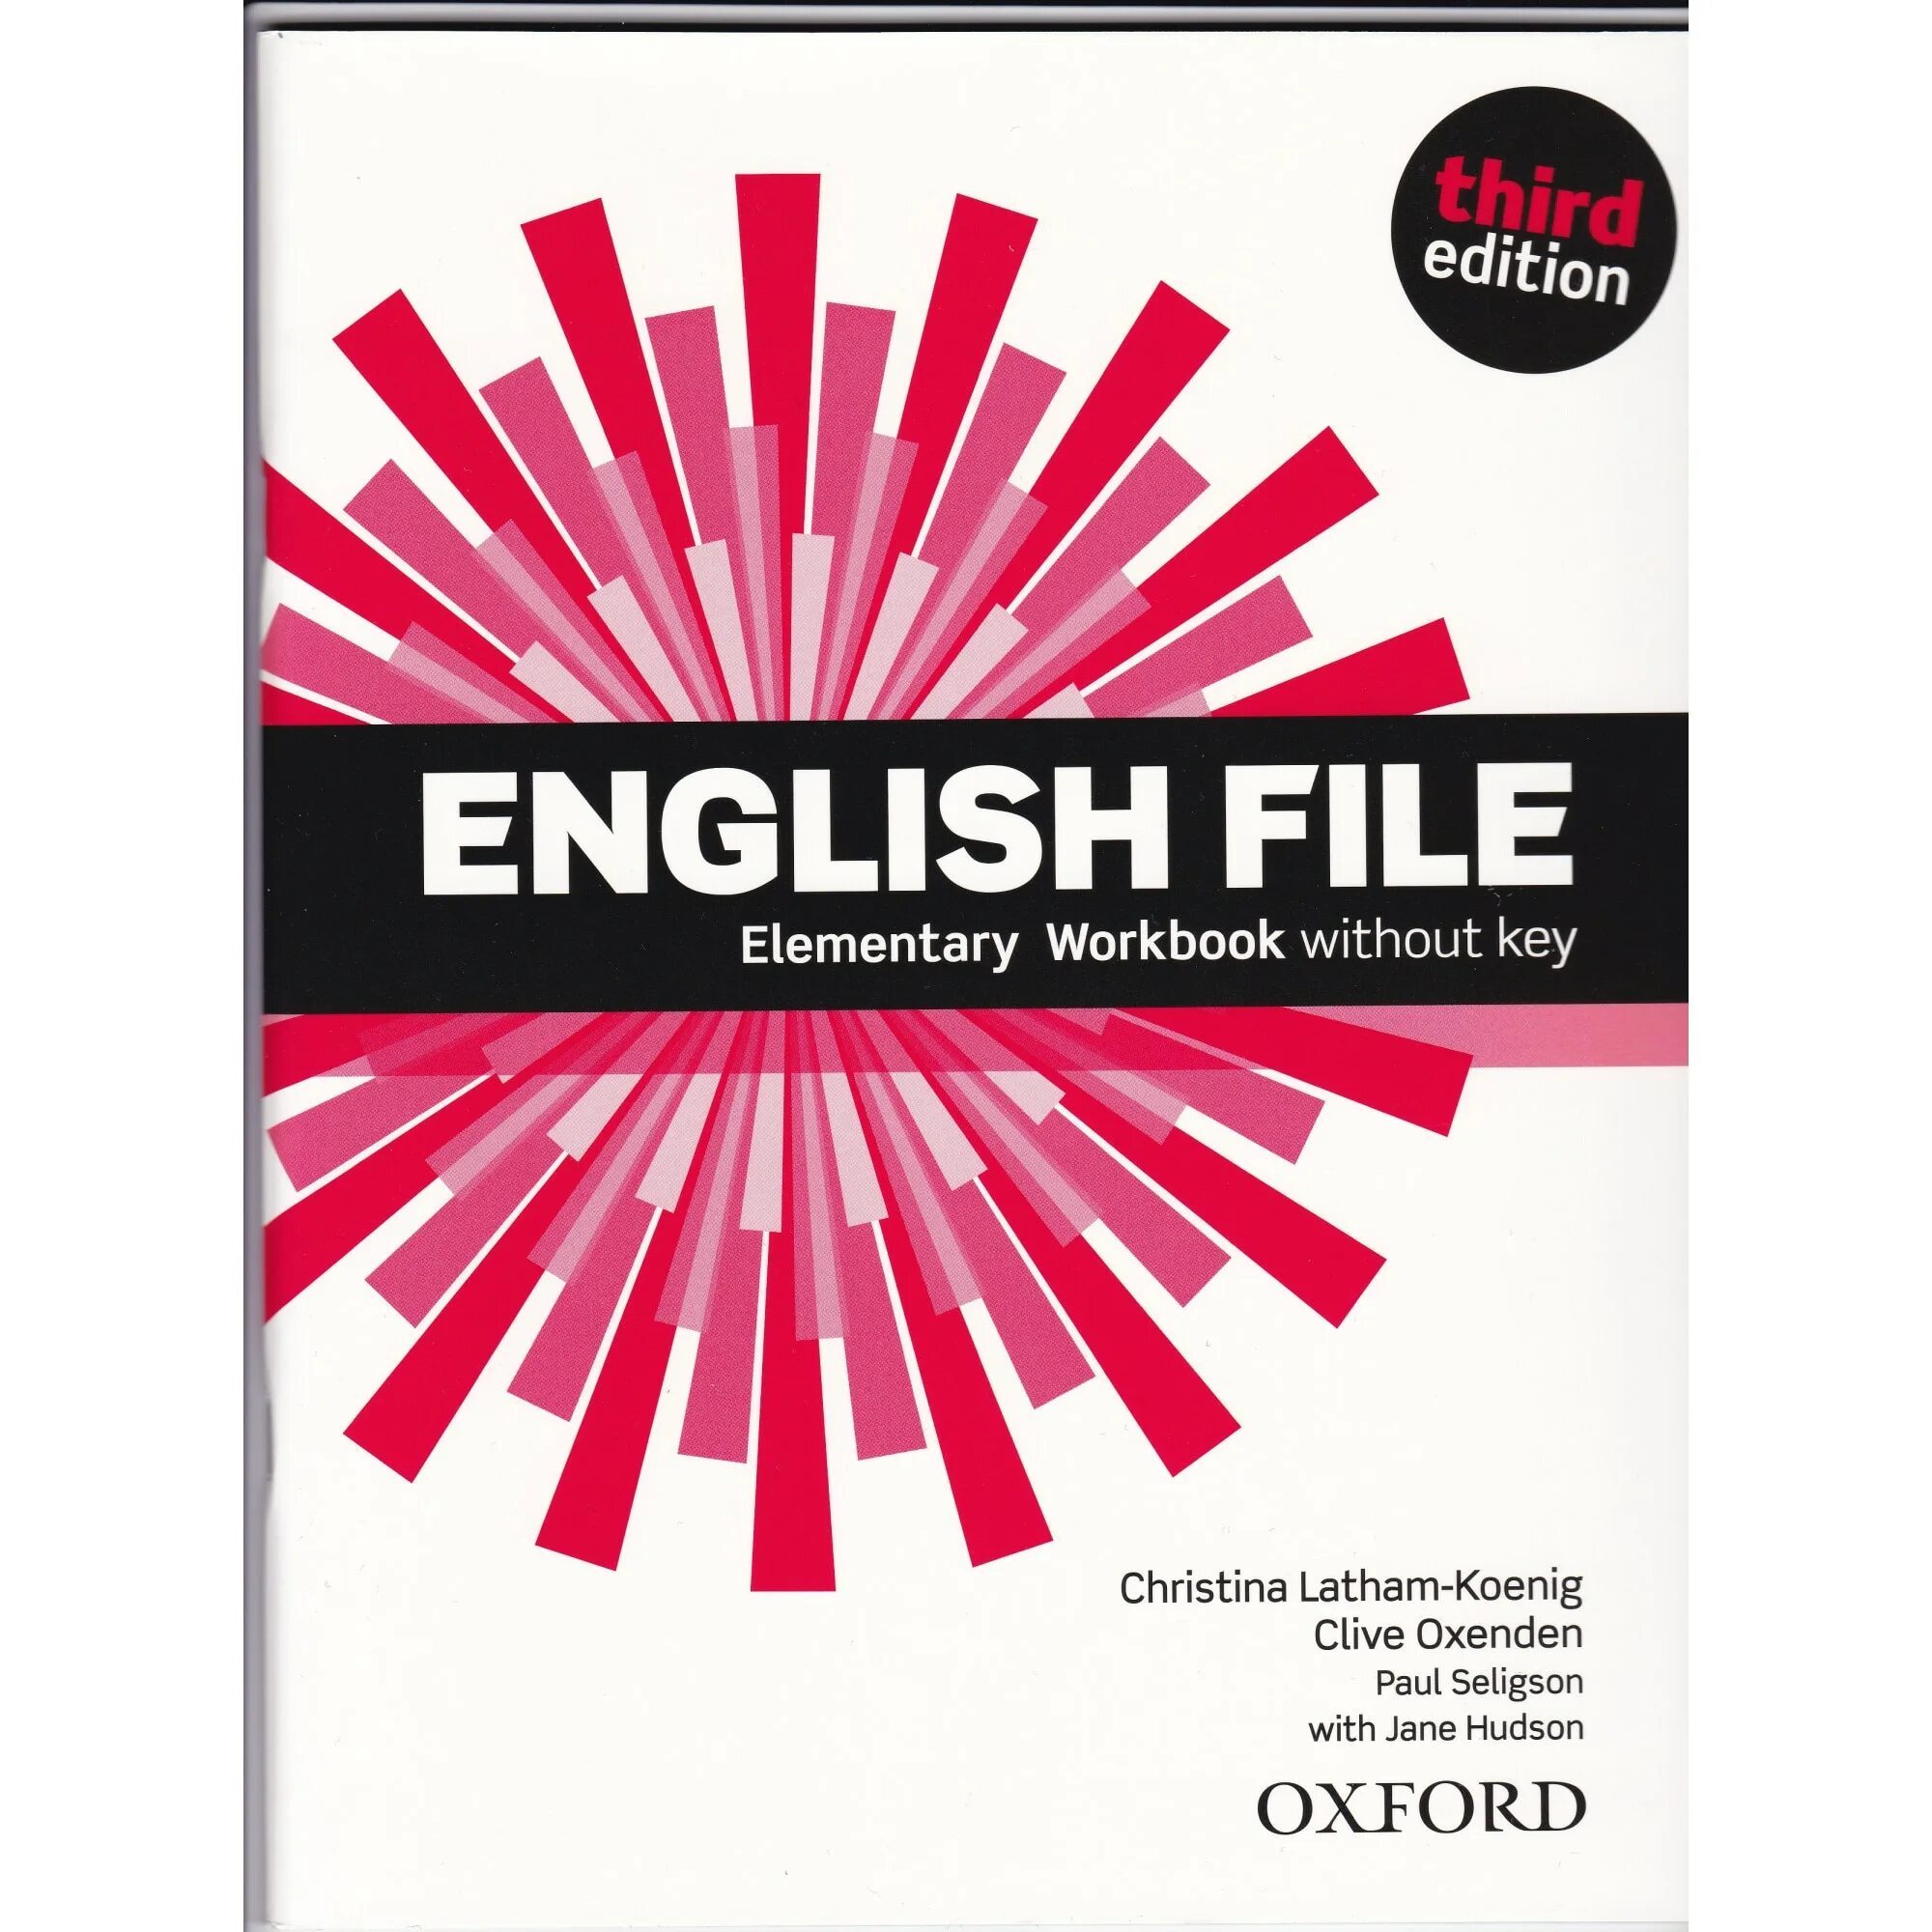 English file Elementary 3rd Edition Workbook. English file: Elementary. English file Oxford. New English file Elementary.